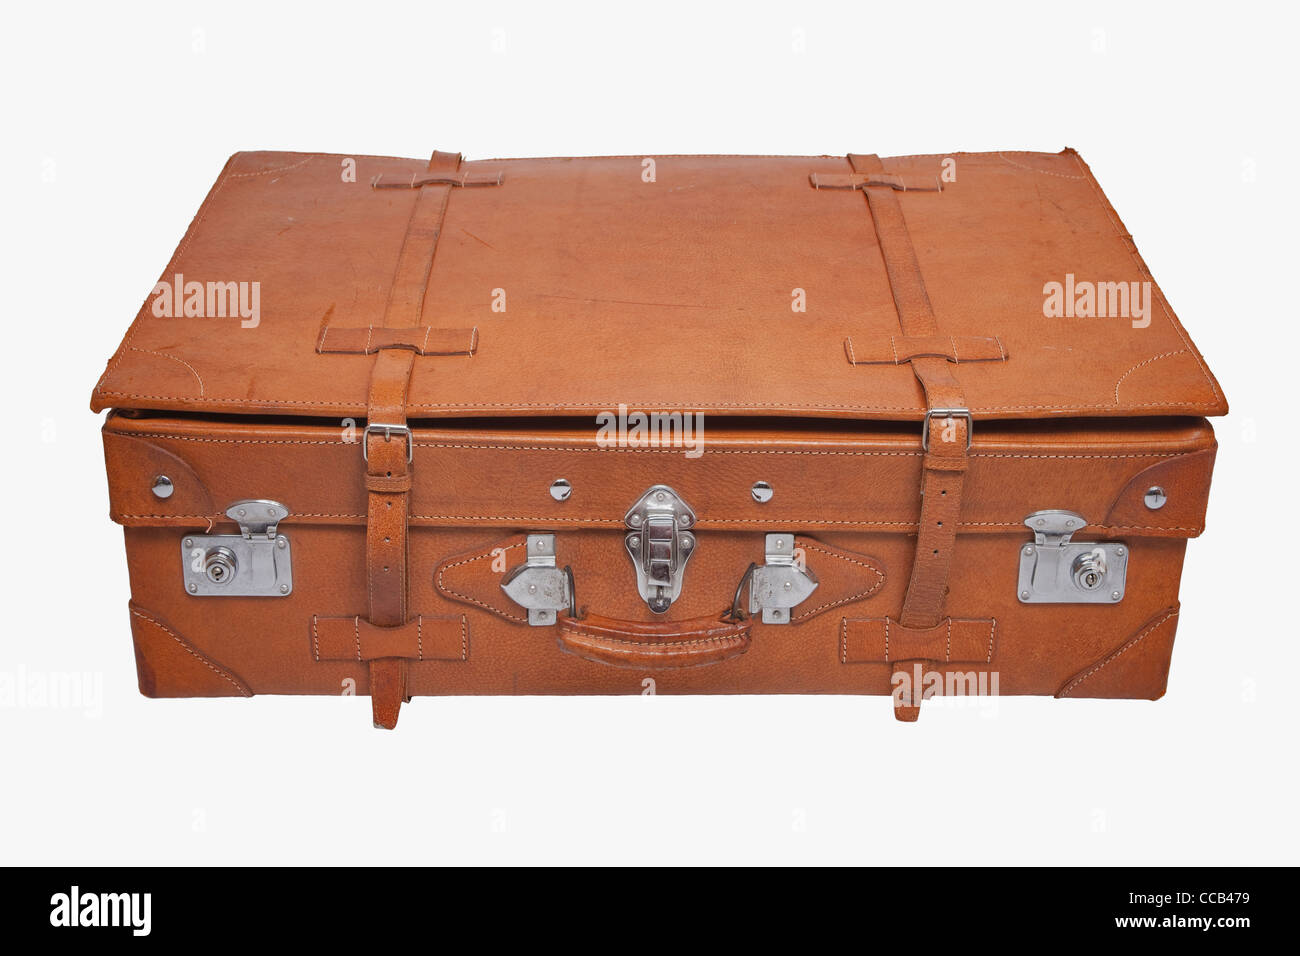 Detailansicht eines alten braunen Lederkoffers | Detail photo of a old brown leather suitcase Stock Photo